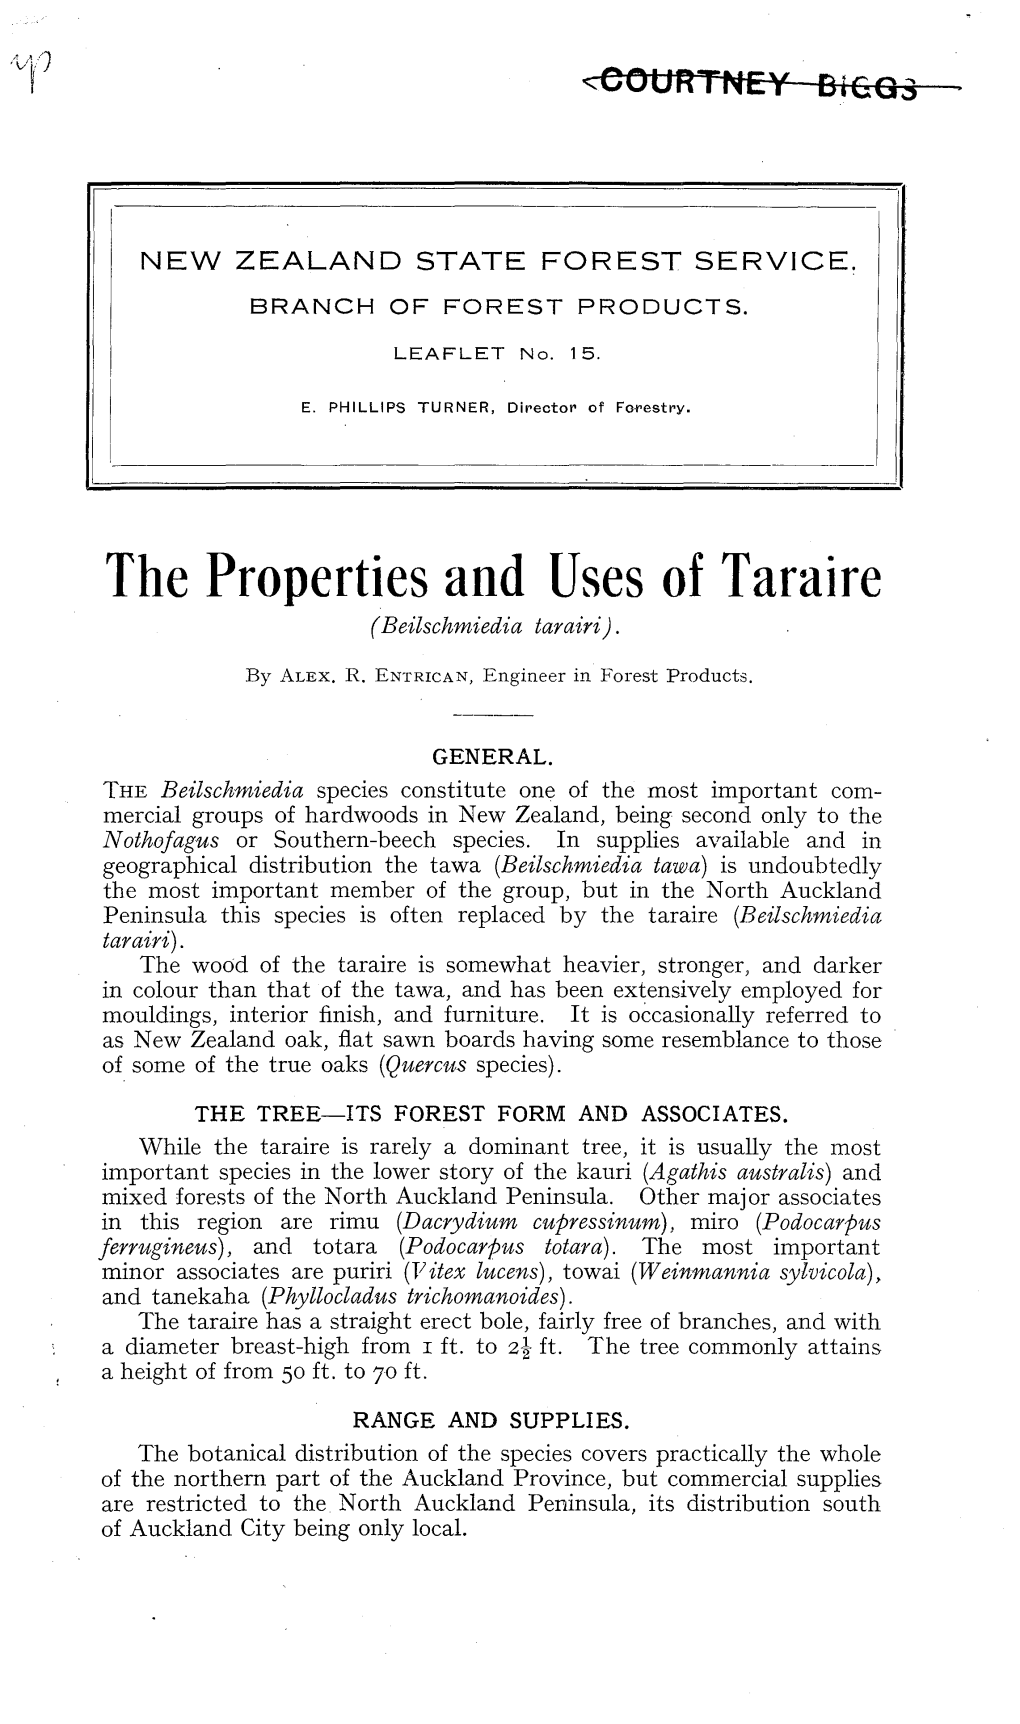 The Properties and Uses of Taraire ( Beilschmiedia Tarairi)